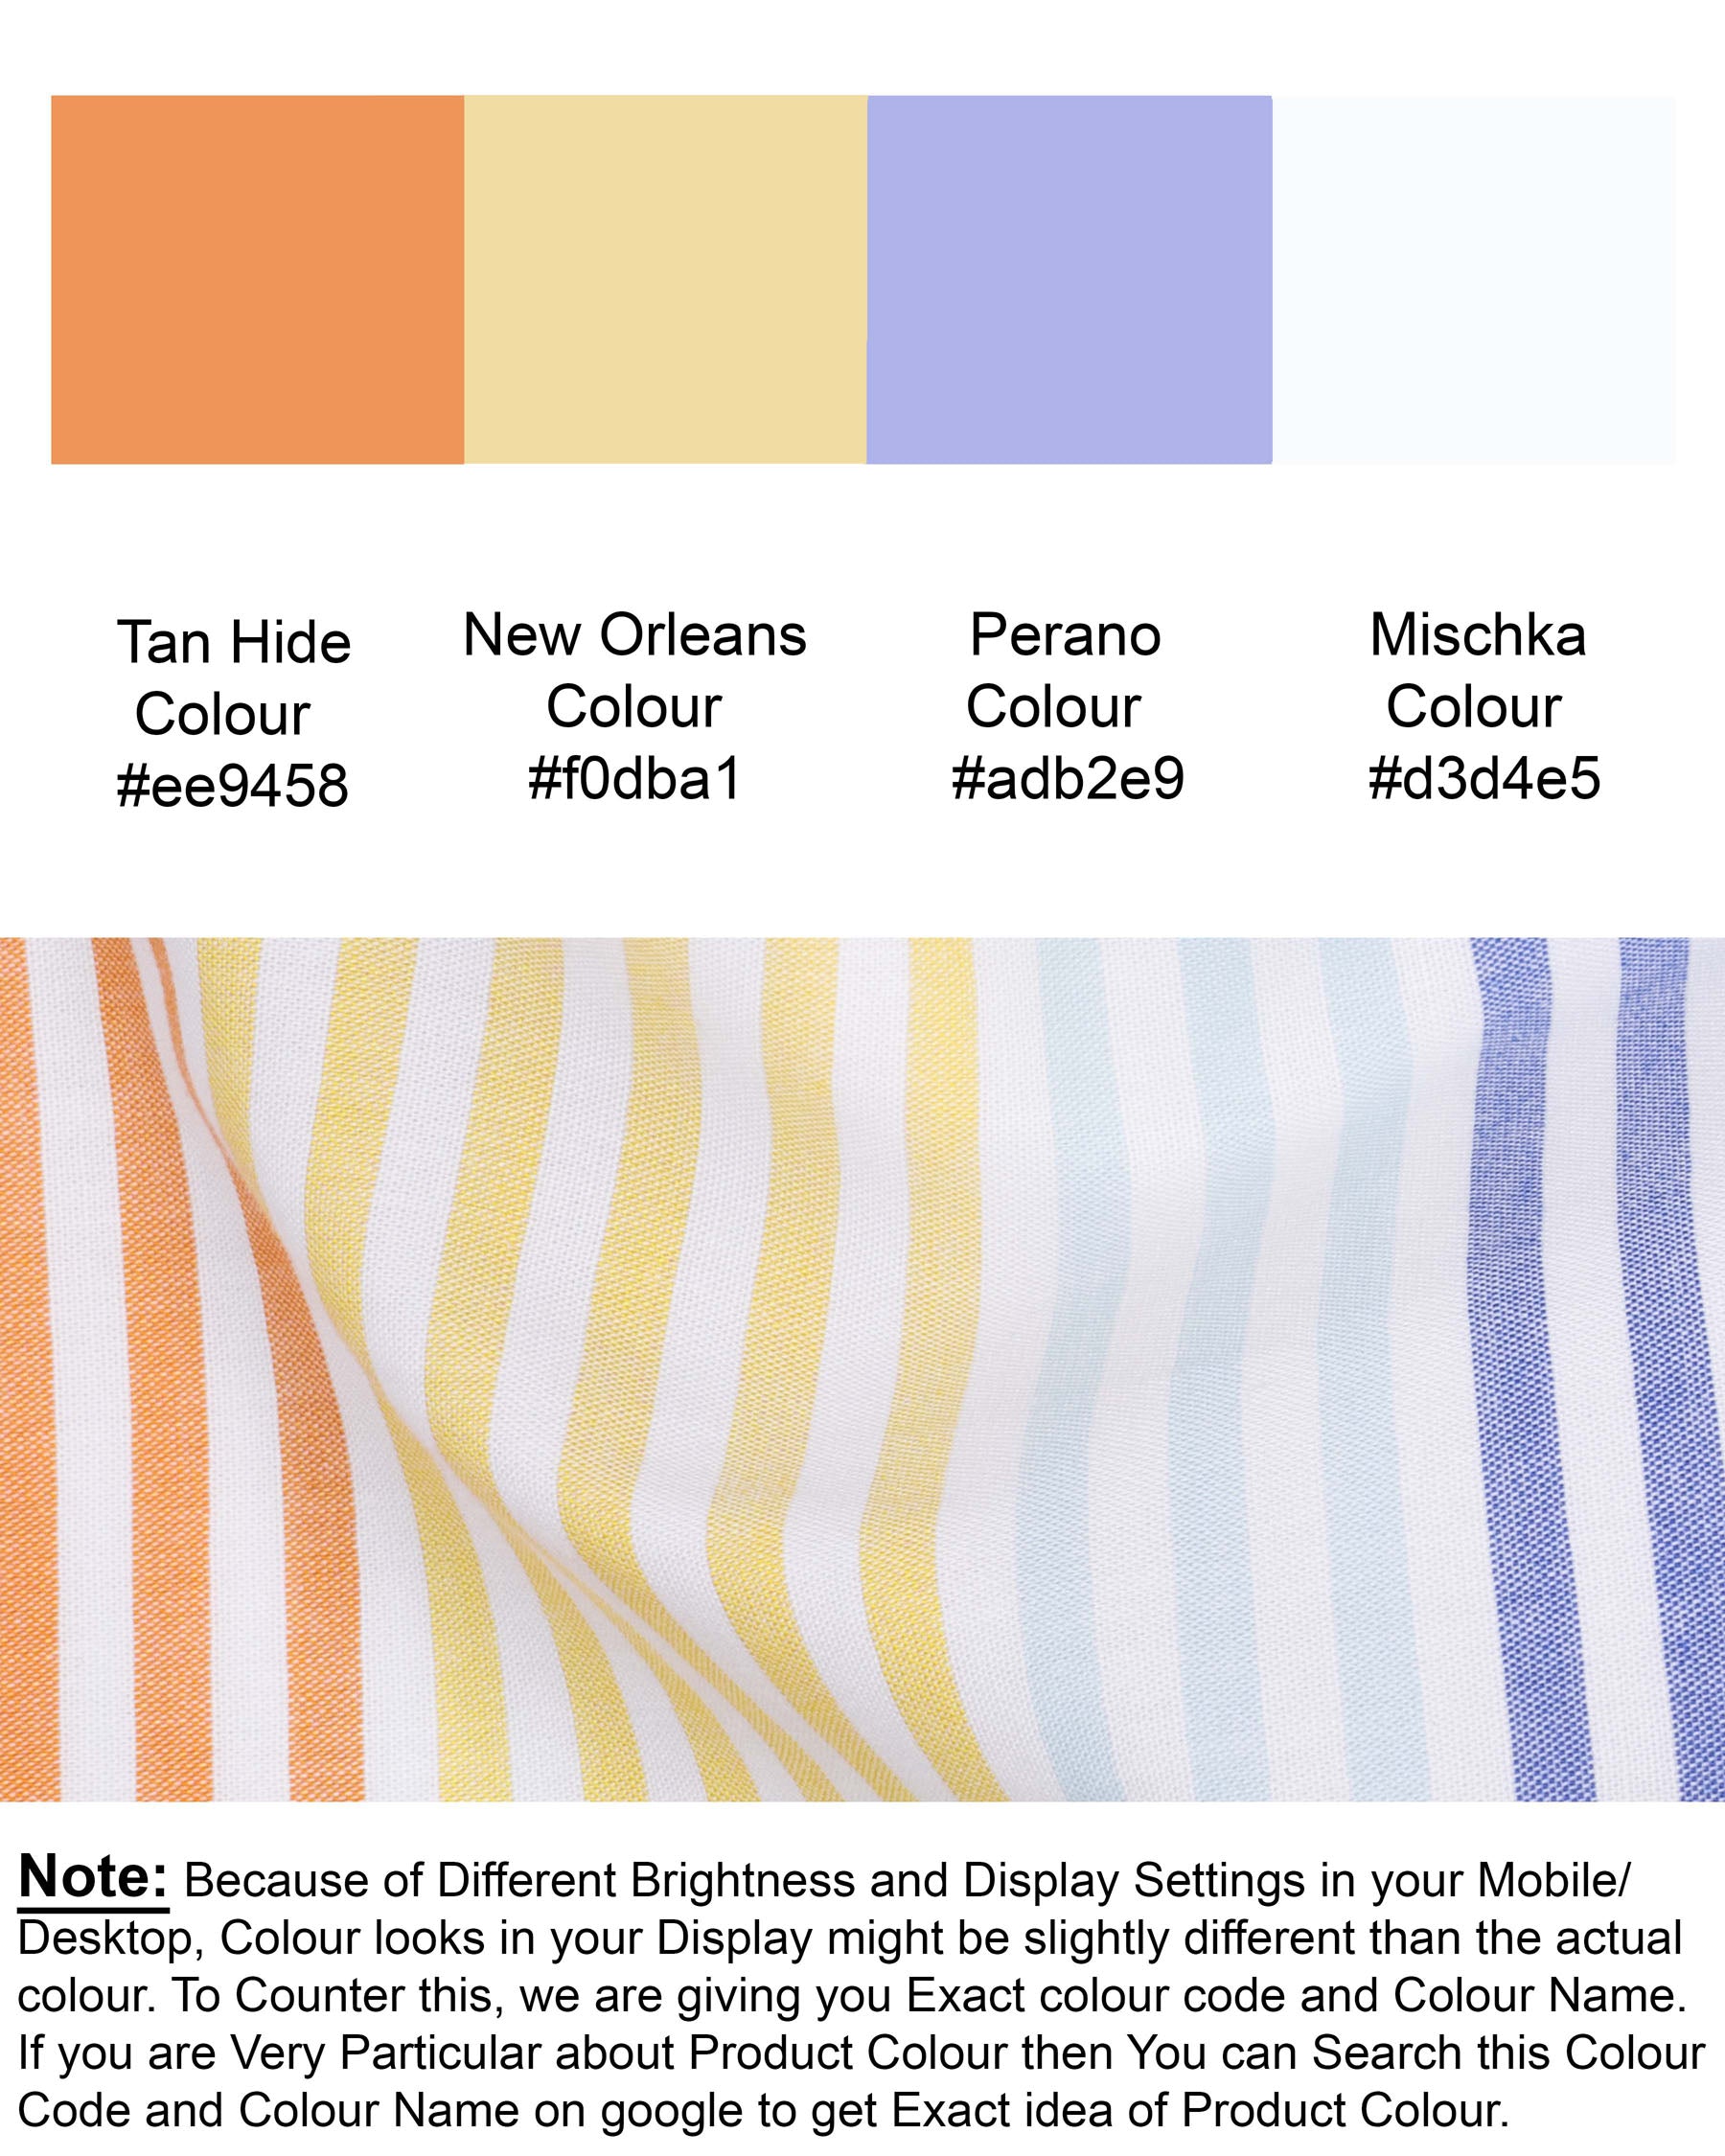 Mischka White Multicolour Striped Premium Cotton Shirt 5944-M-38, 5944-M-H-38, 5944-M-39, 5944-M-H-39, 5944-M-40, 5944-M-H-40, 5944-M-42, 5944-M-H-42, 5944-M-44, 5944-M-H-44, 5944-M-46, 5944-M-H-46, 5944-M-48, 5944-M-H-48, 5944-M-50, 5944-M-H-50, 5944-M-52, 5944-M-H-52